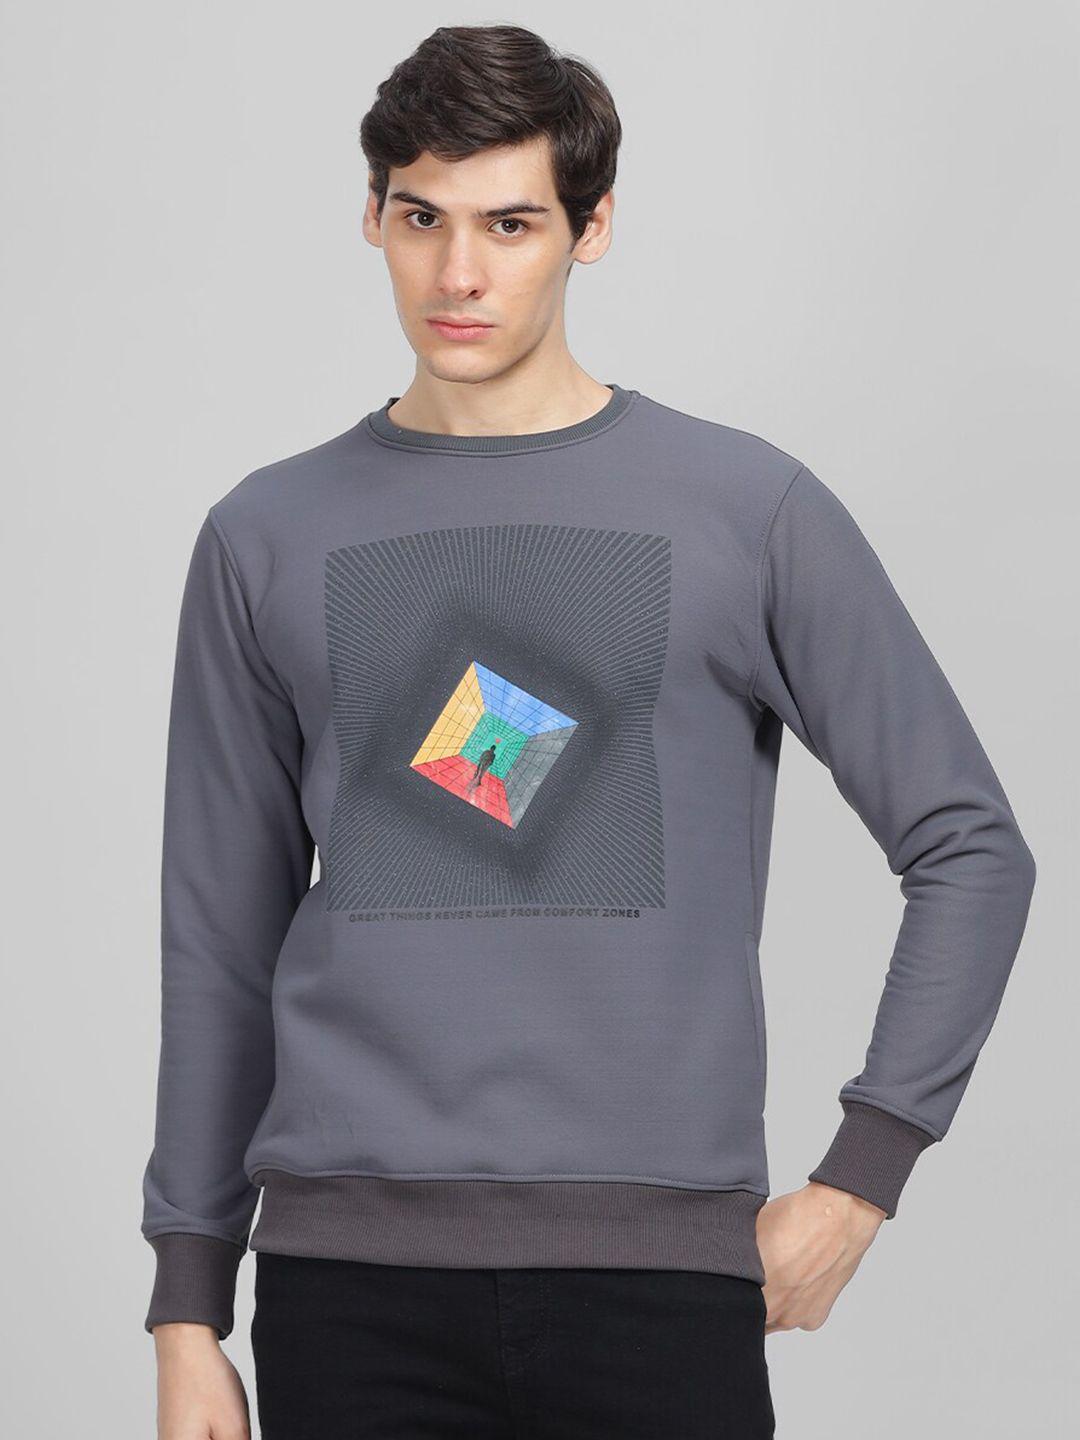 parcel yard graphic printed pullover sweatshirt